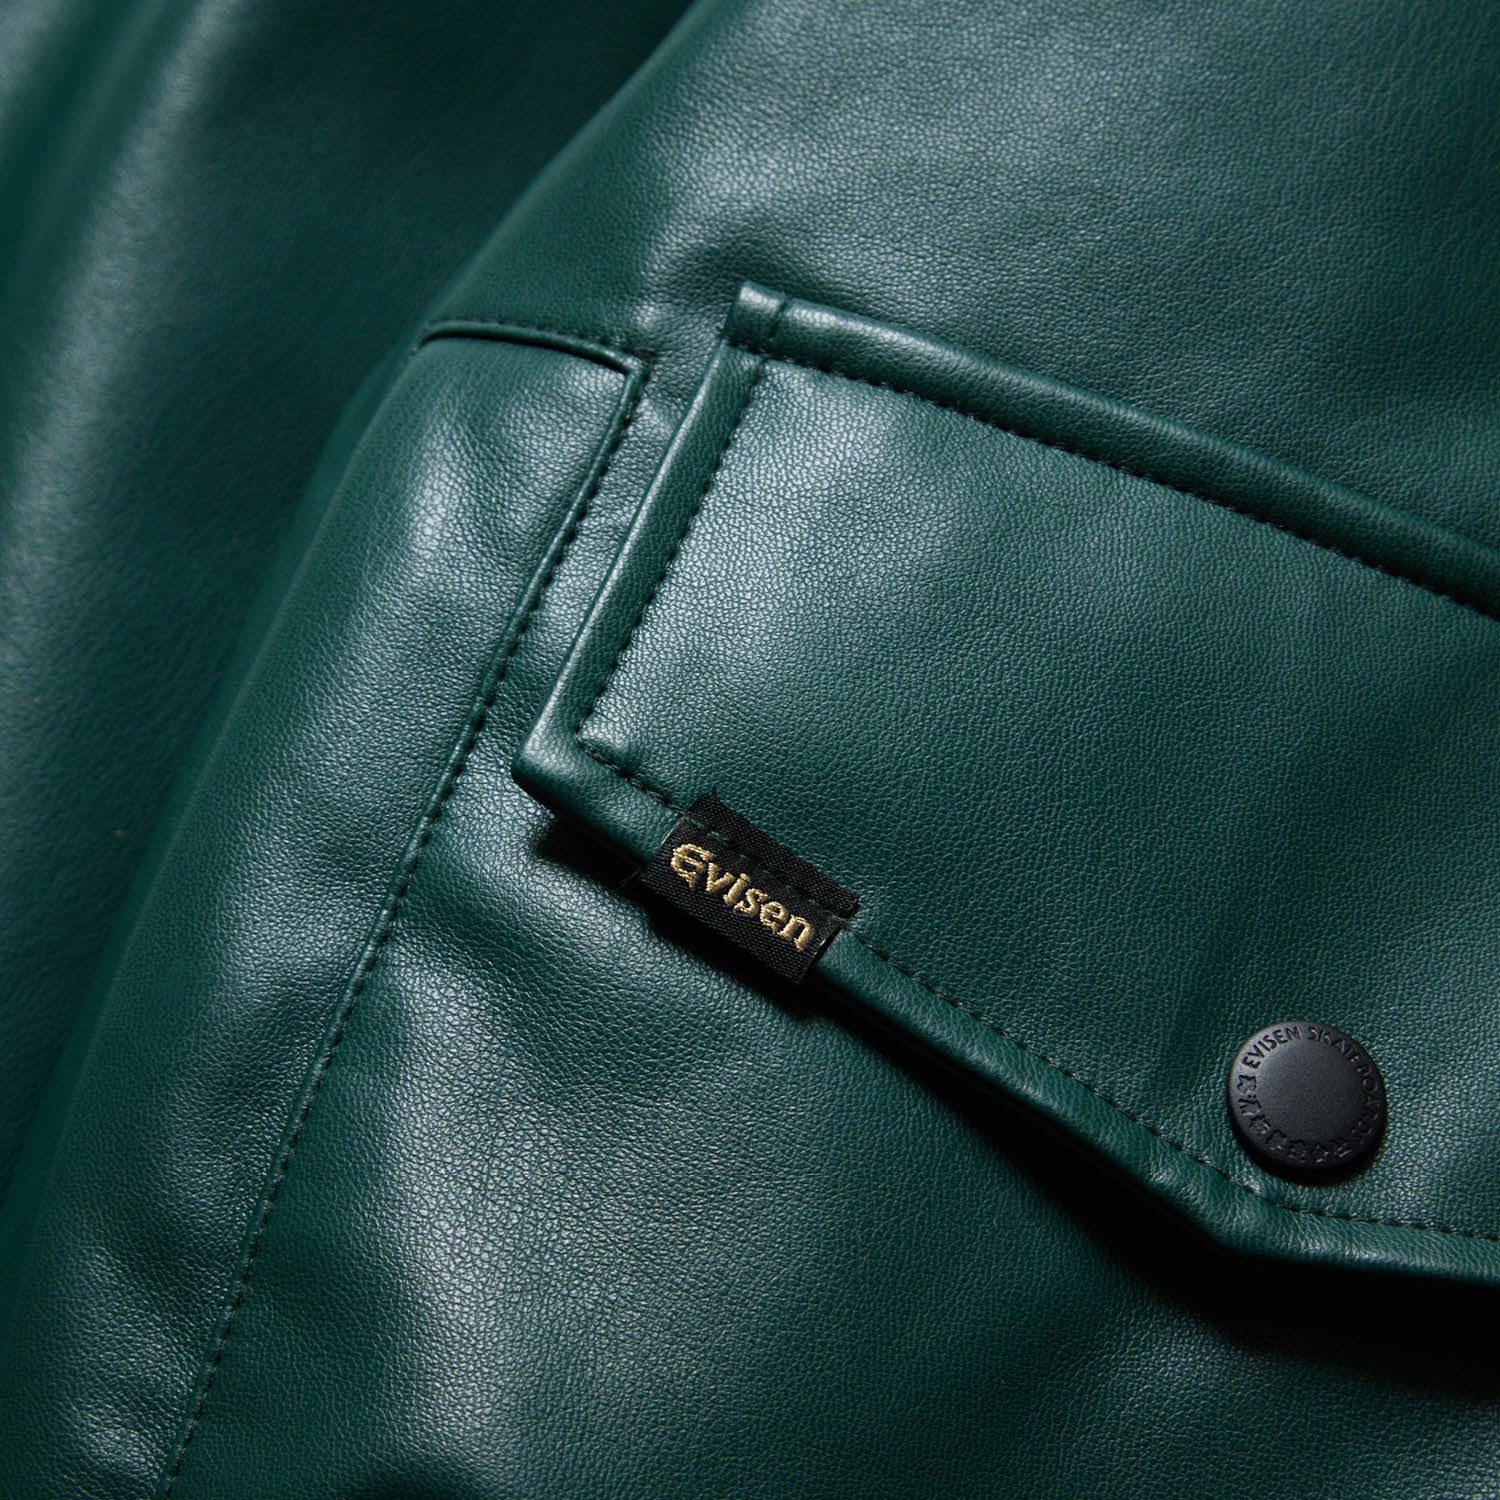 Evisen Leather Down JKT エビセン レザーダウンジャケットサイズLサイズ